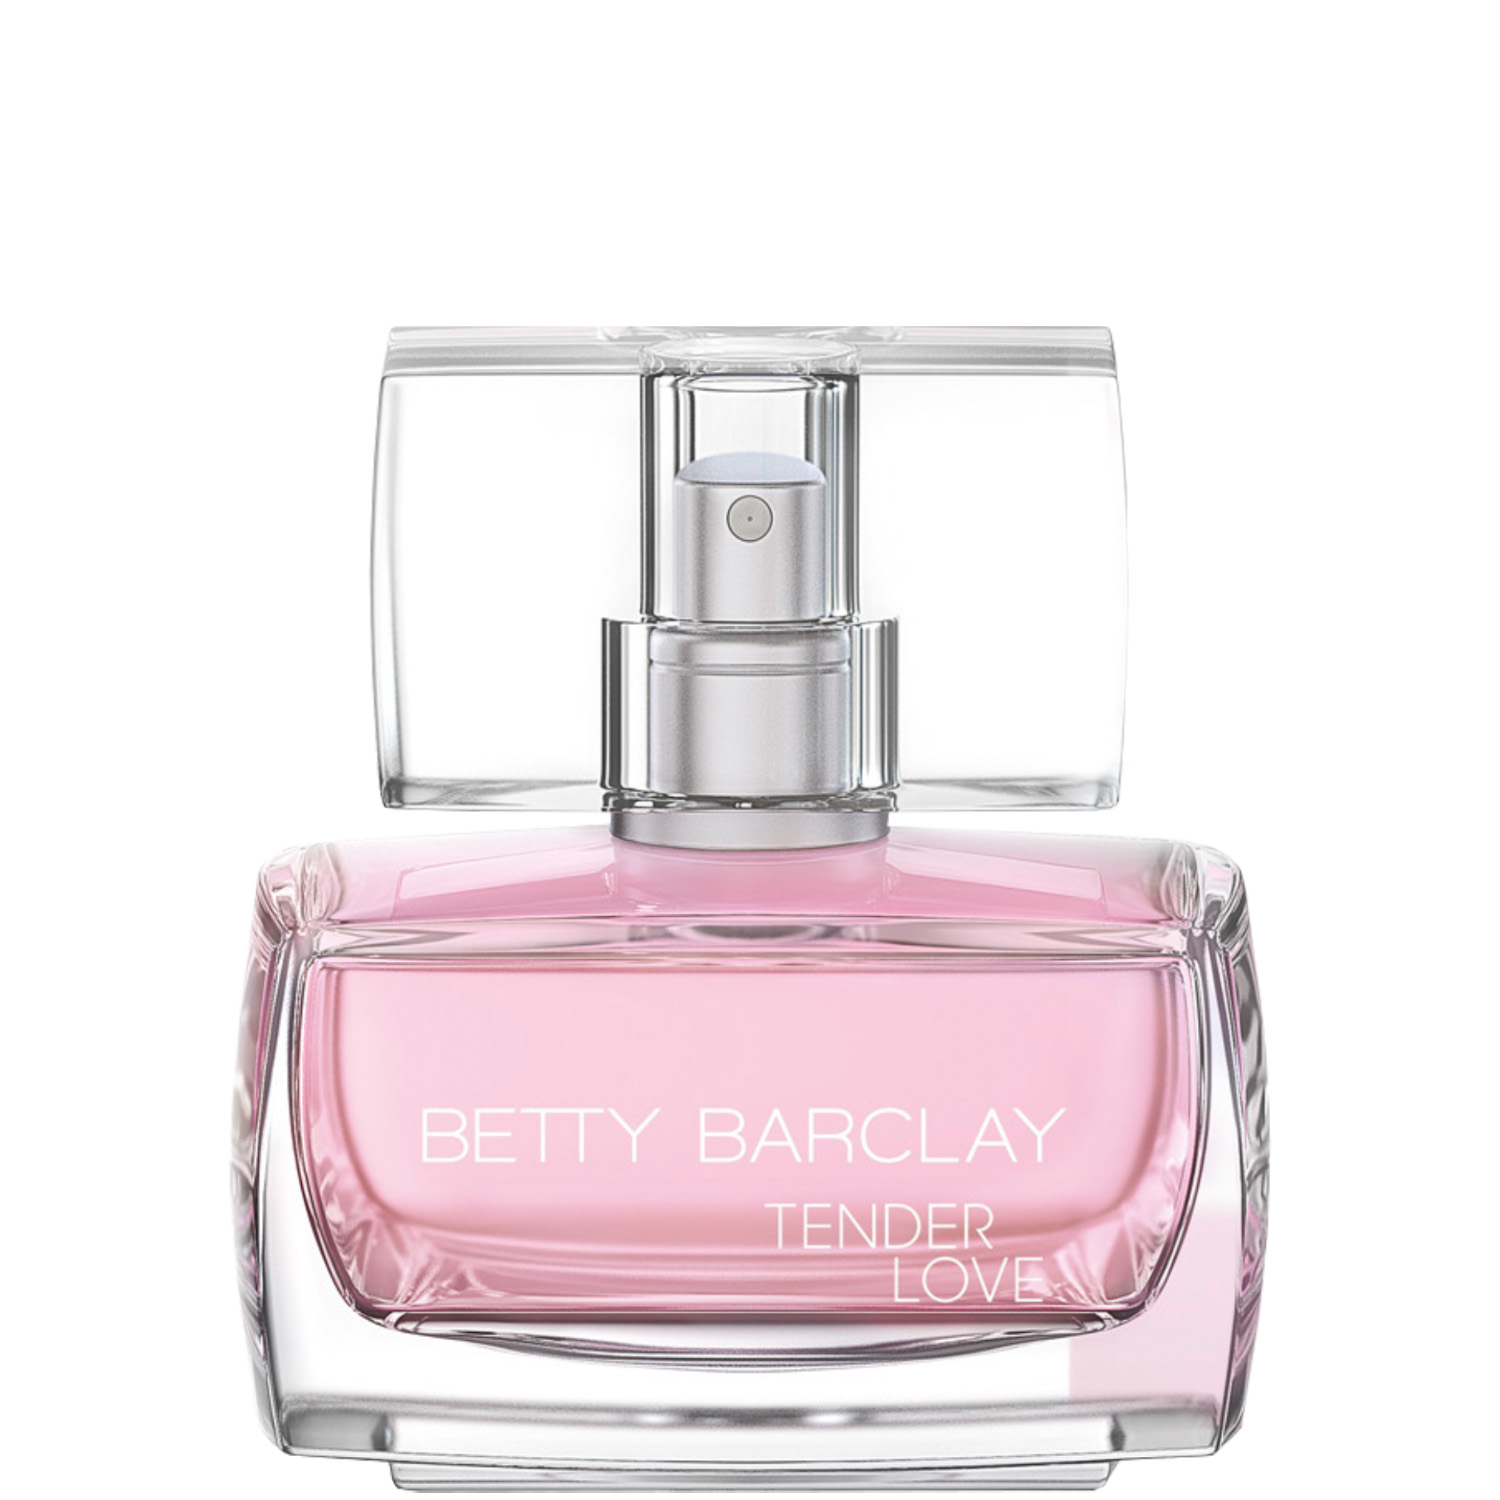 Betty Barclay Tender Love Eau de Parfum 20ml